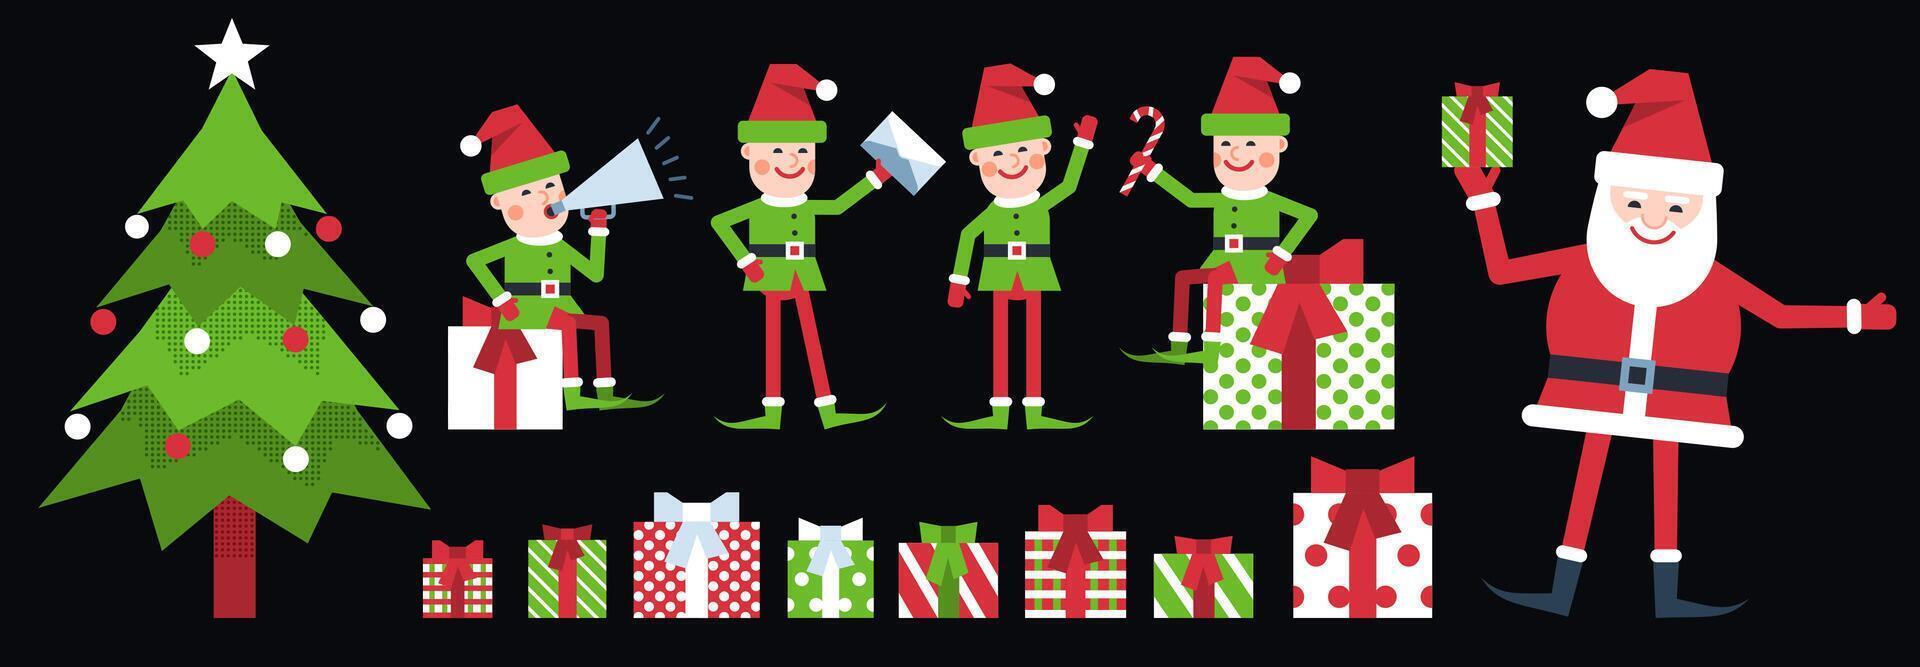 Christmas elf - Santa helper poses vector